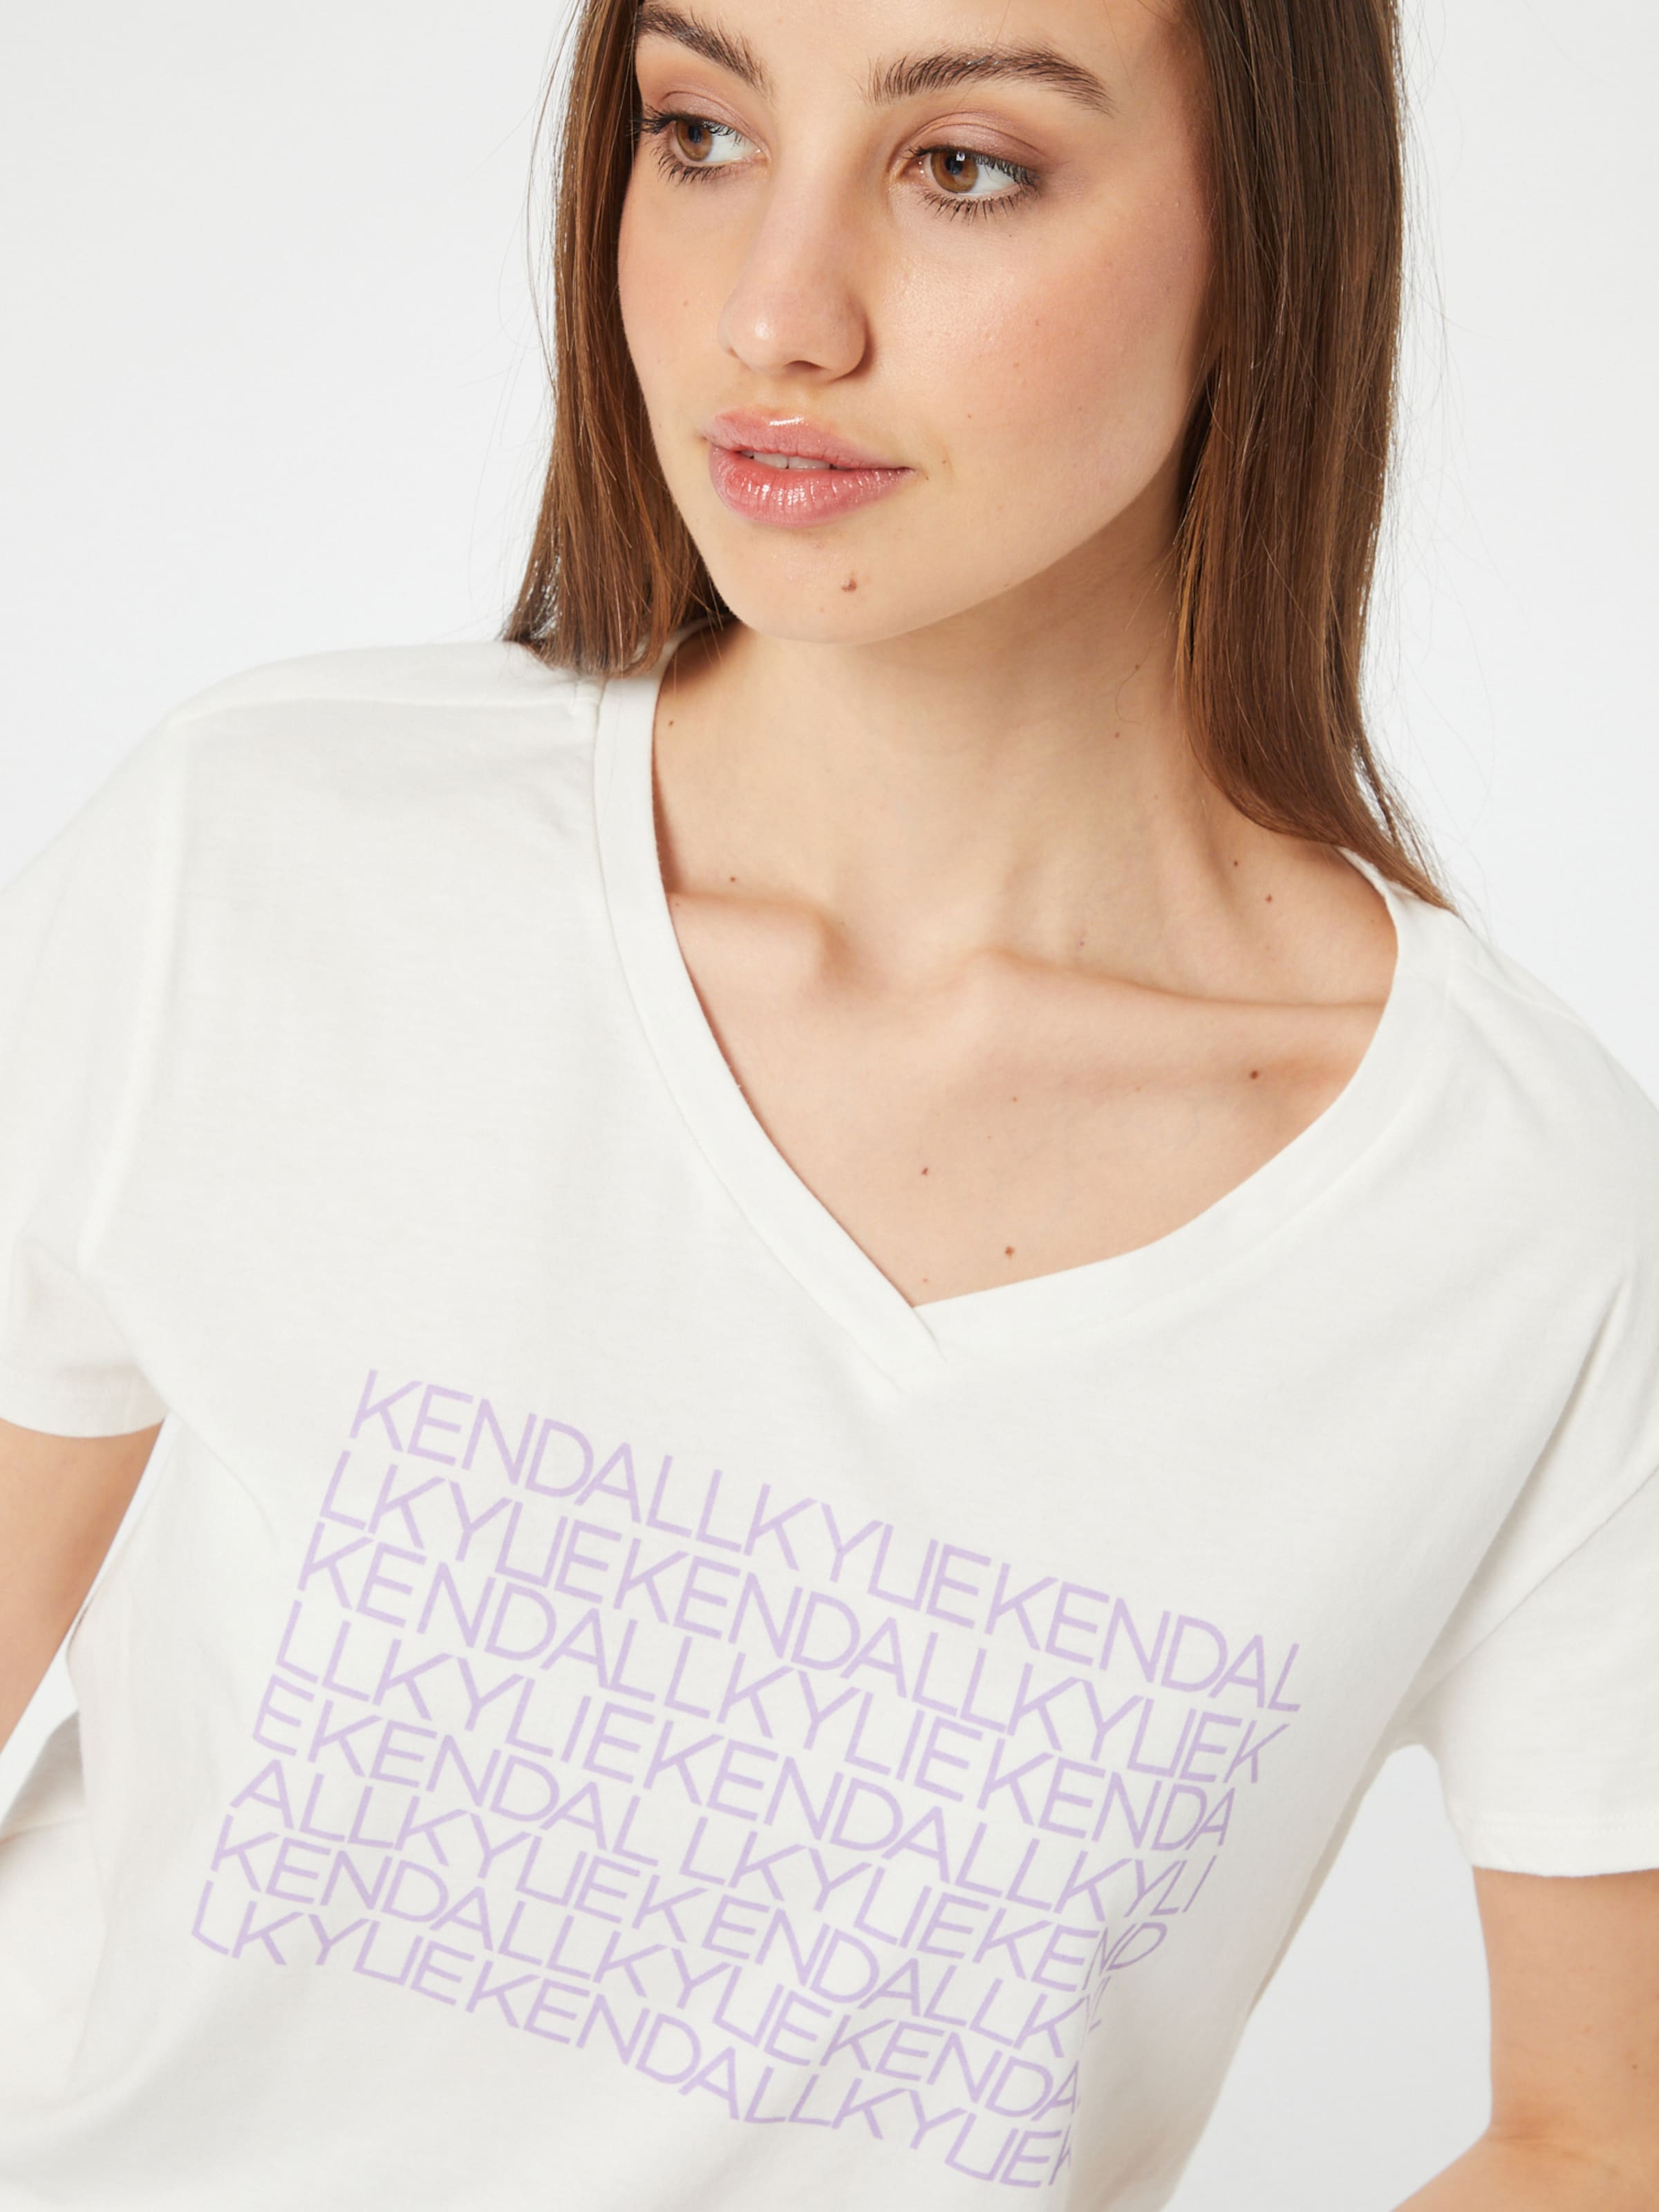 Frauen Shirts & Tops KENDALL + KYLIE T-Shirt in Weiß - VJ38256